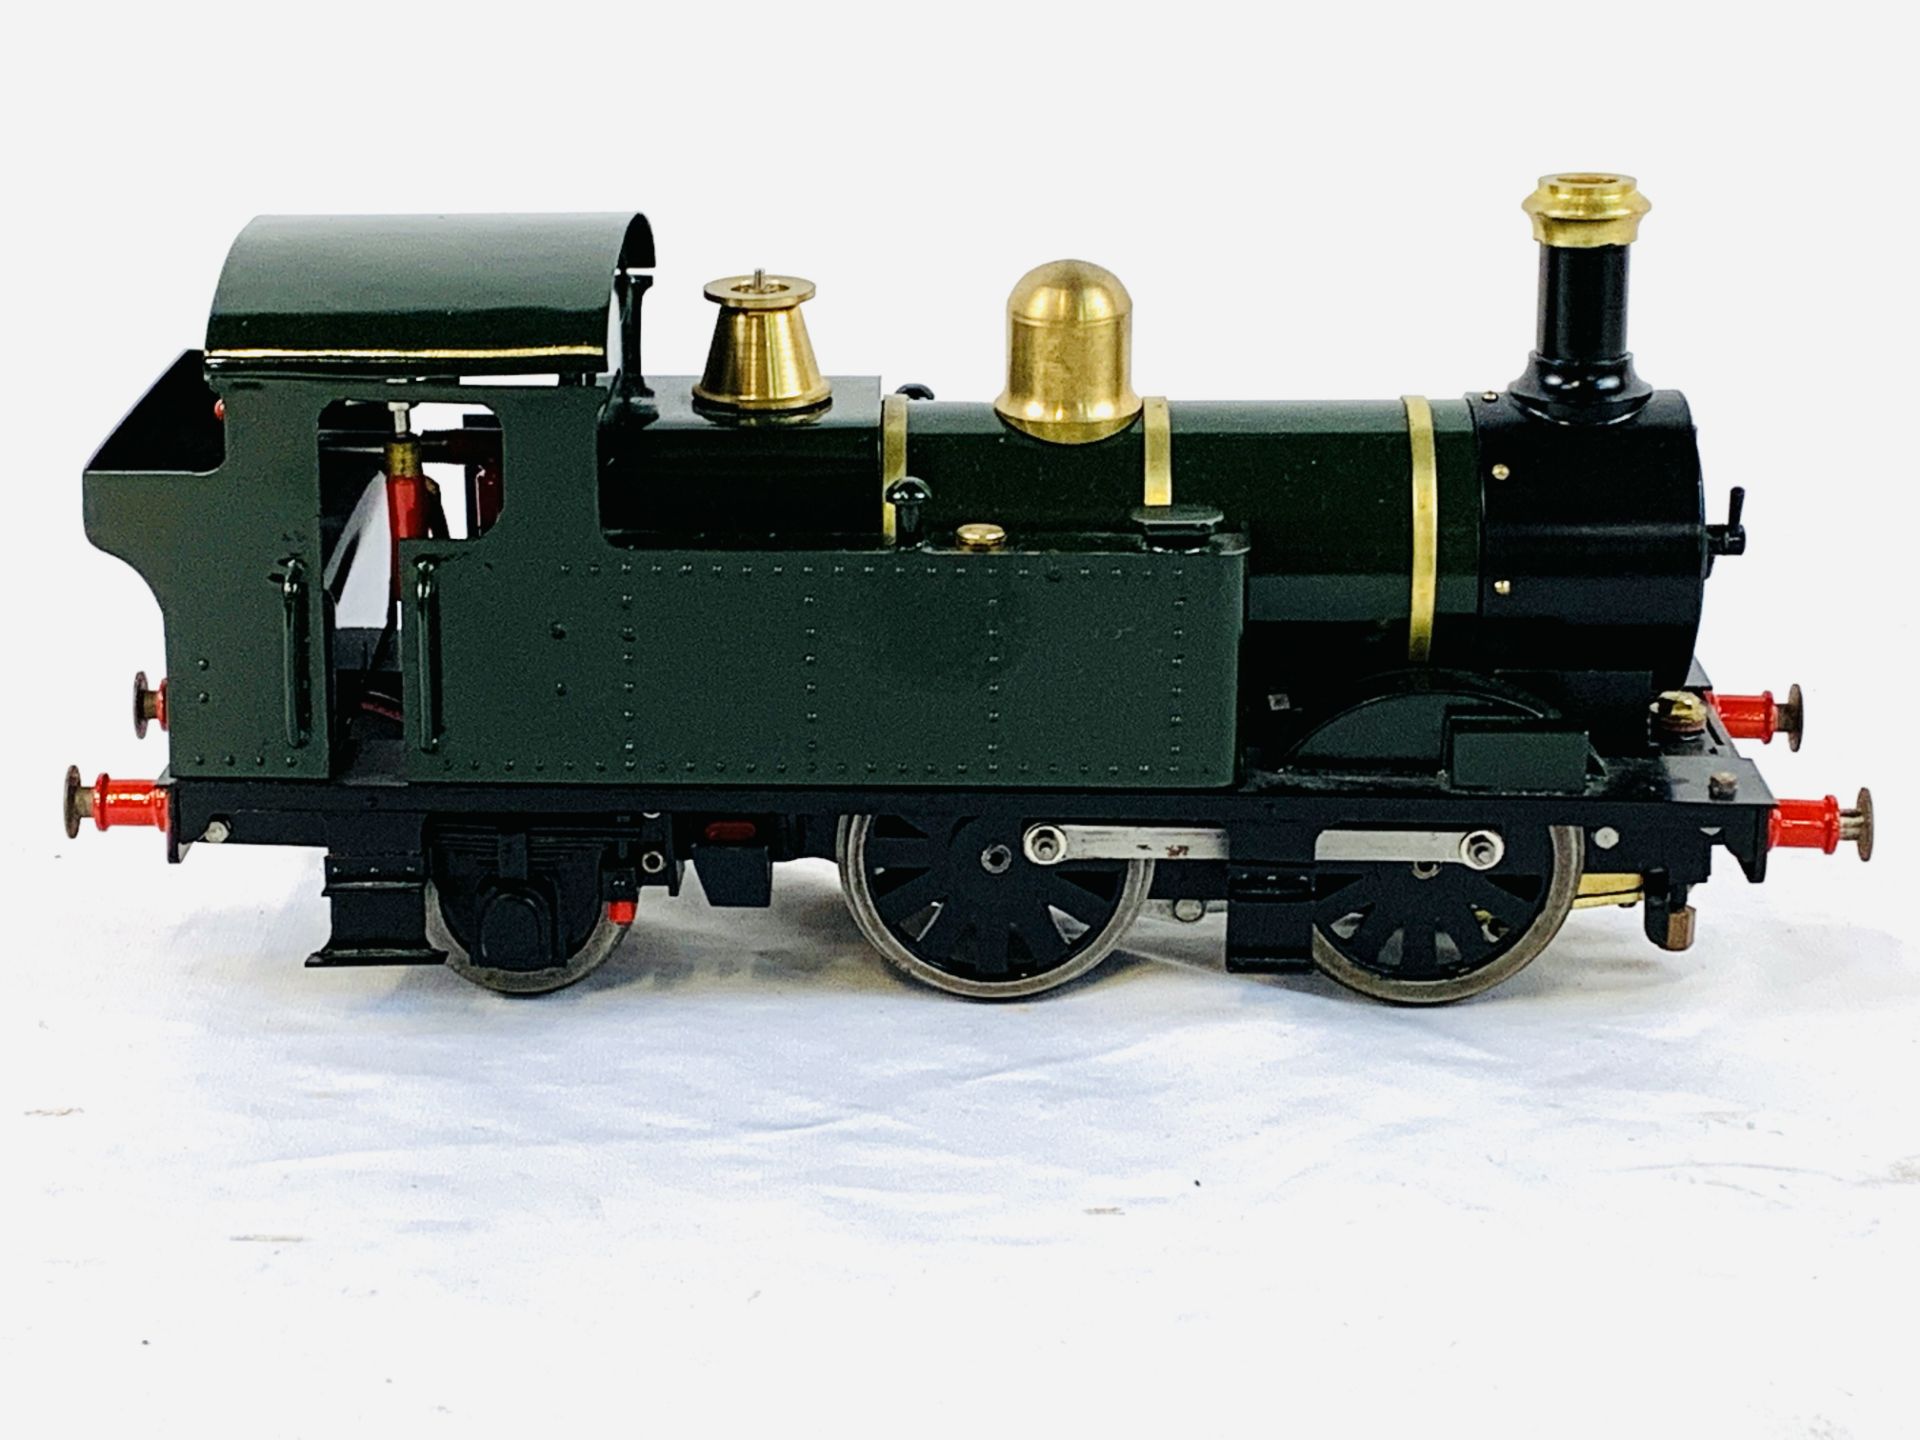 A model GWR 1400 class locomotive in gauge 1